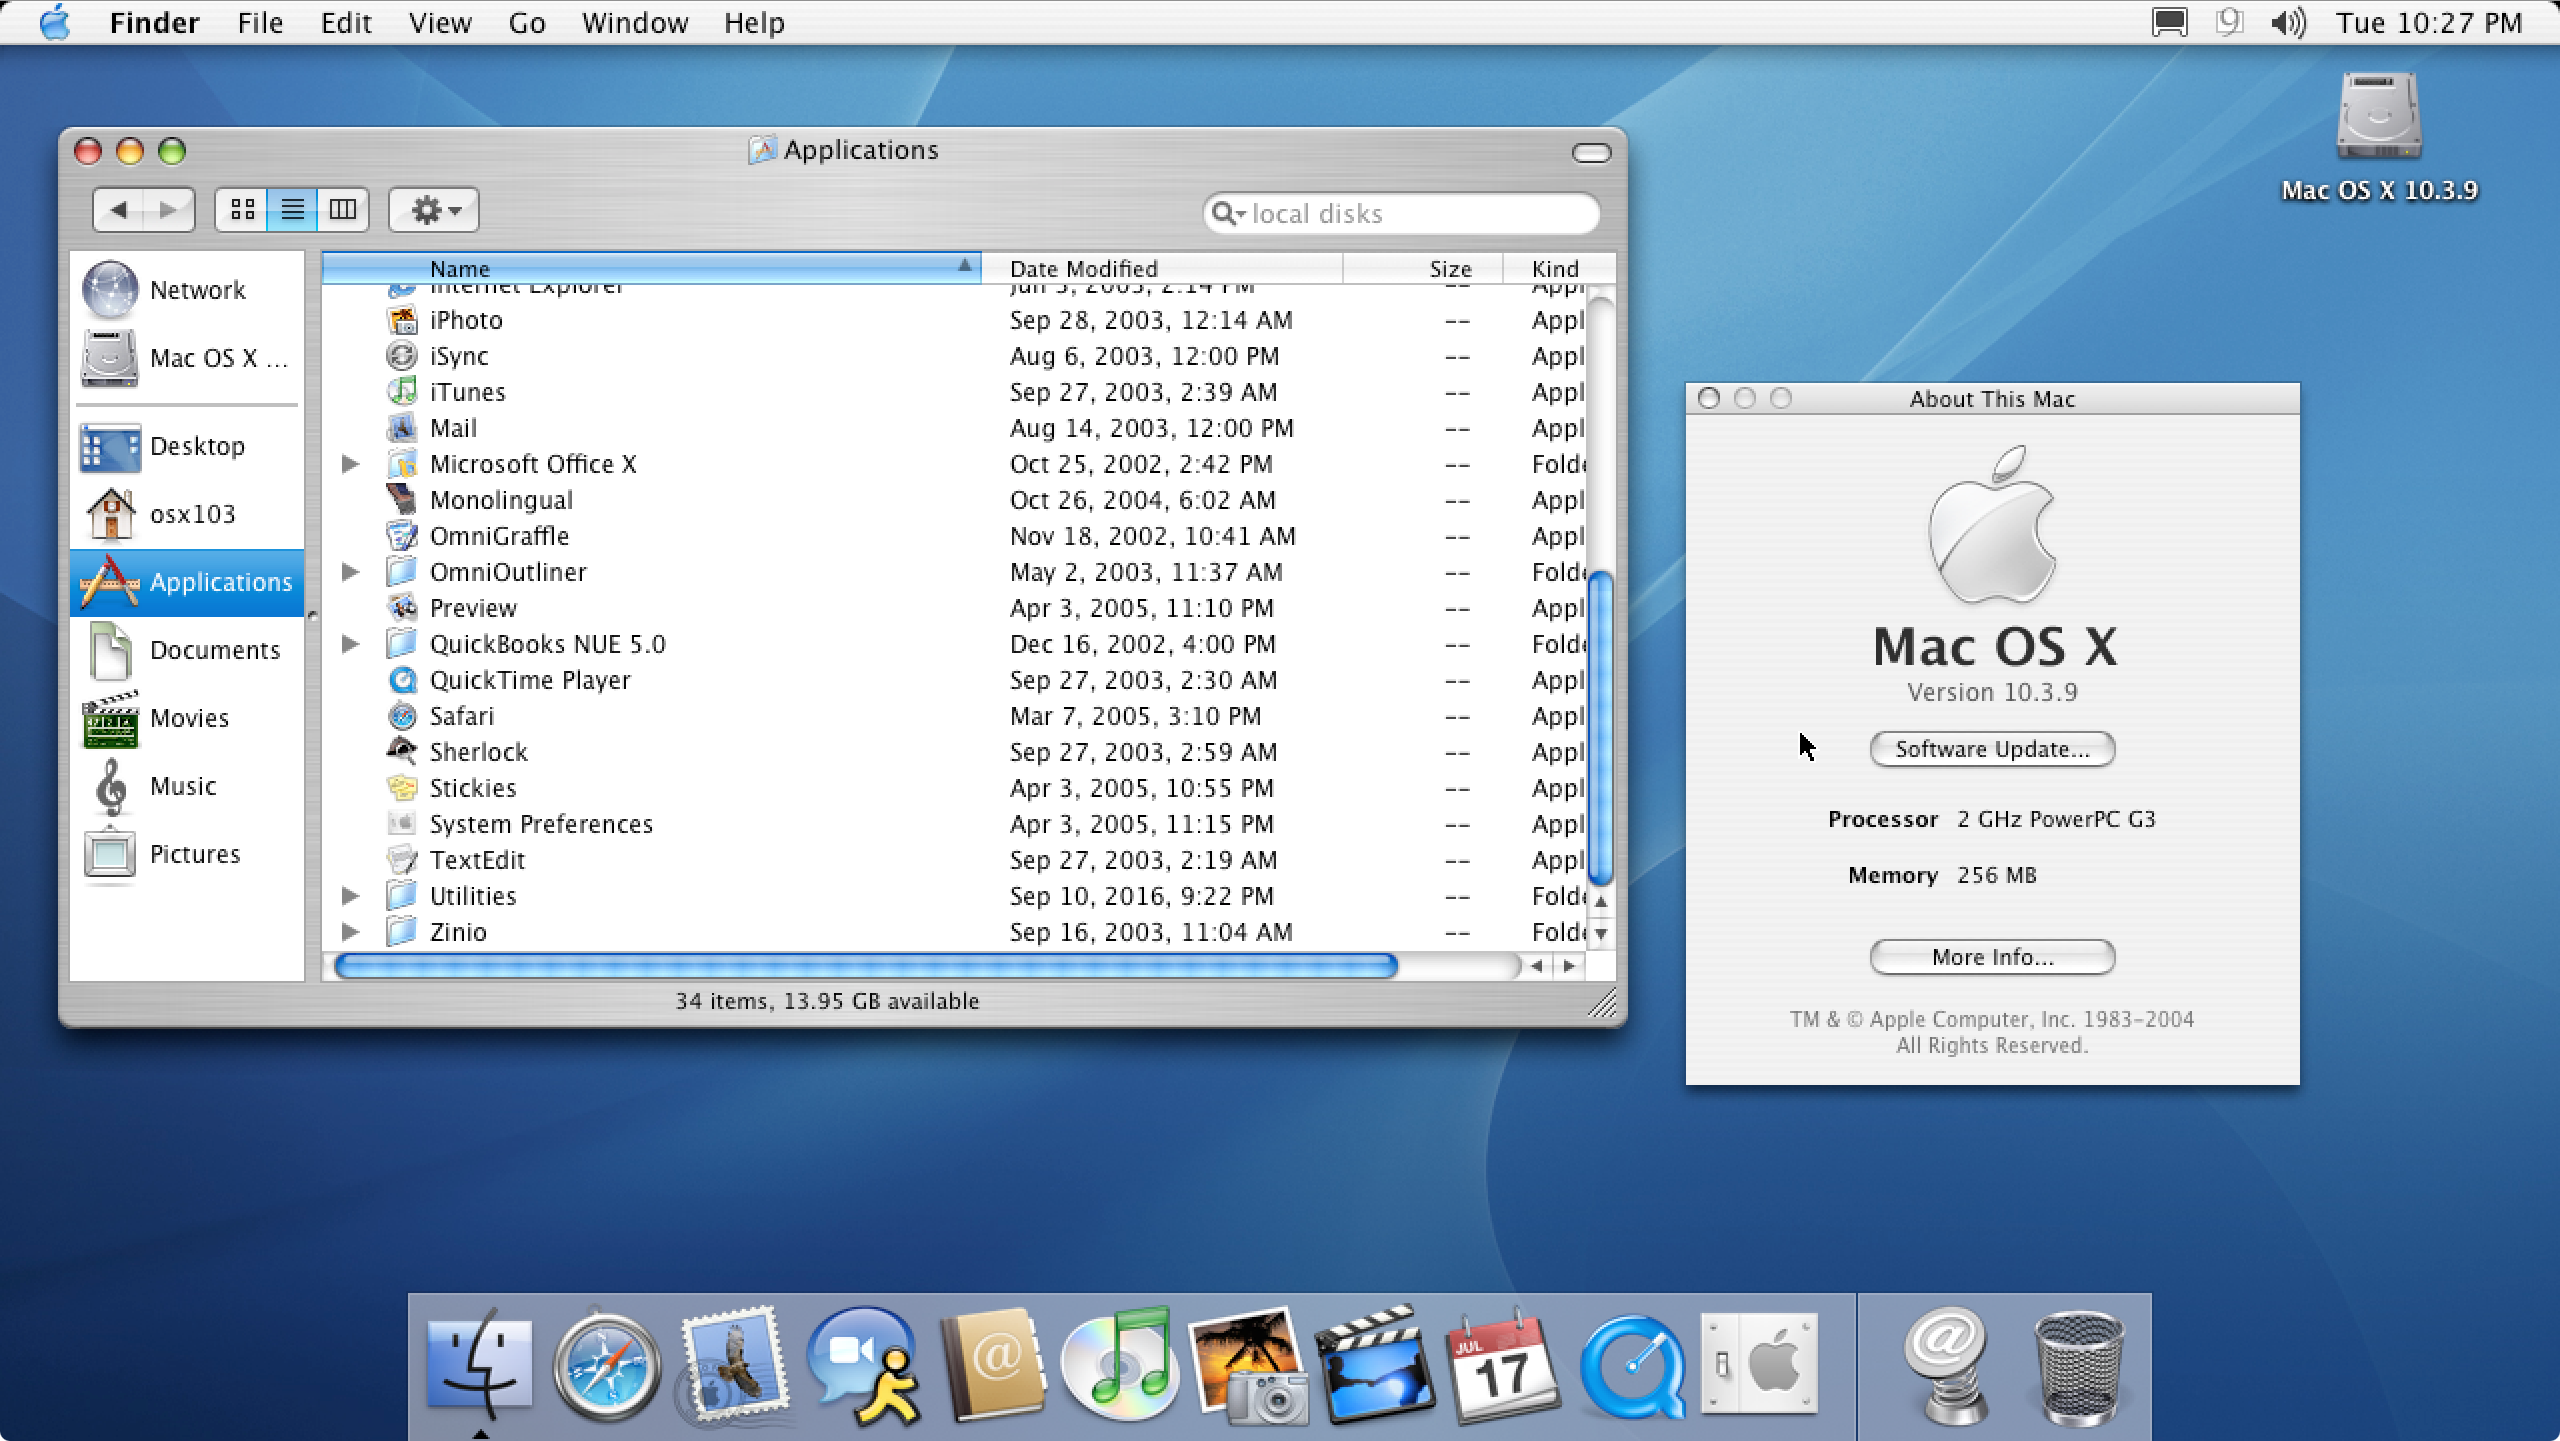 apple ii emulator for mac os x